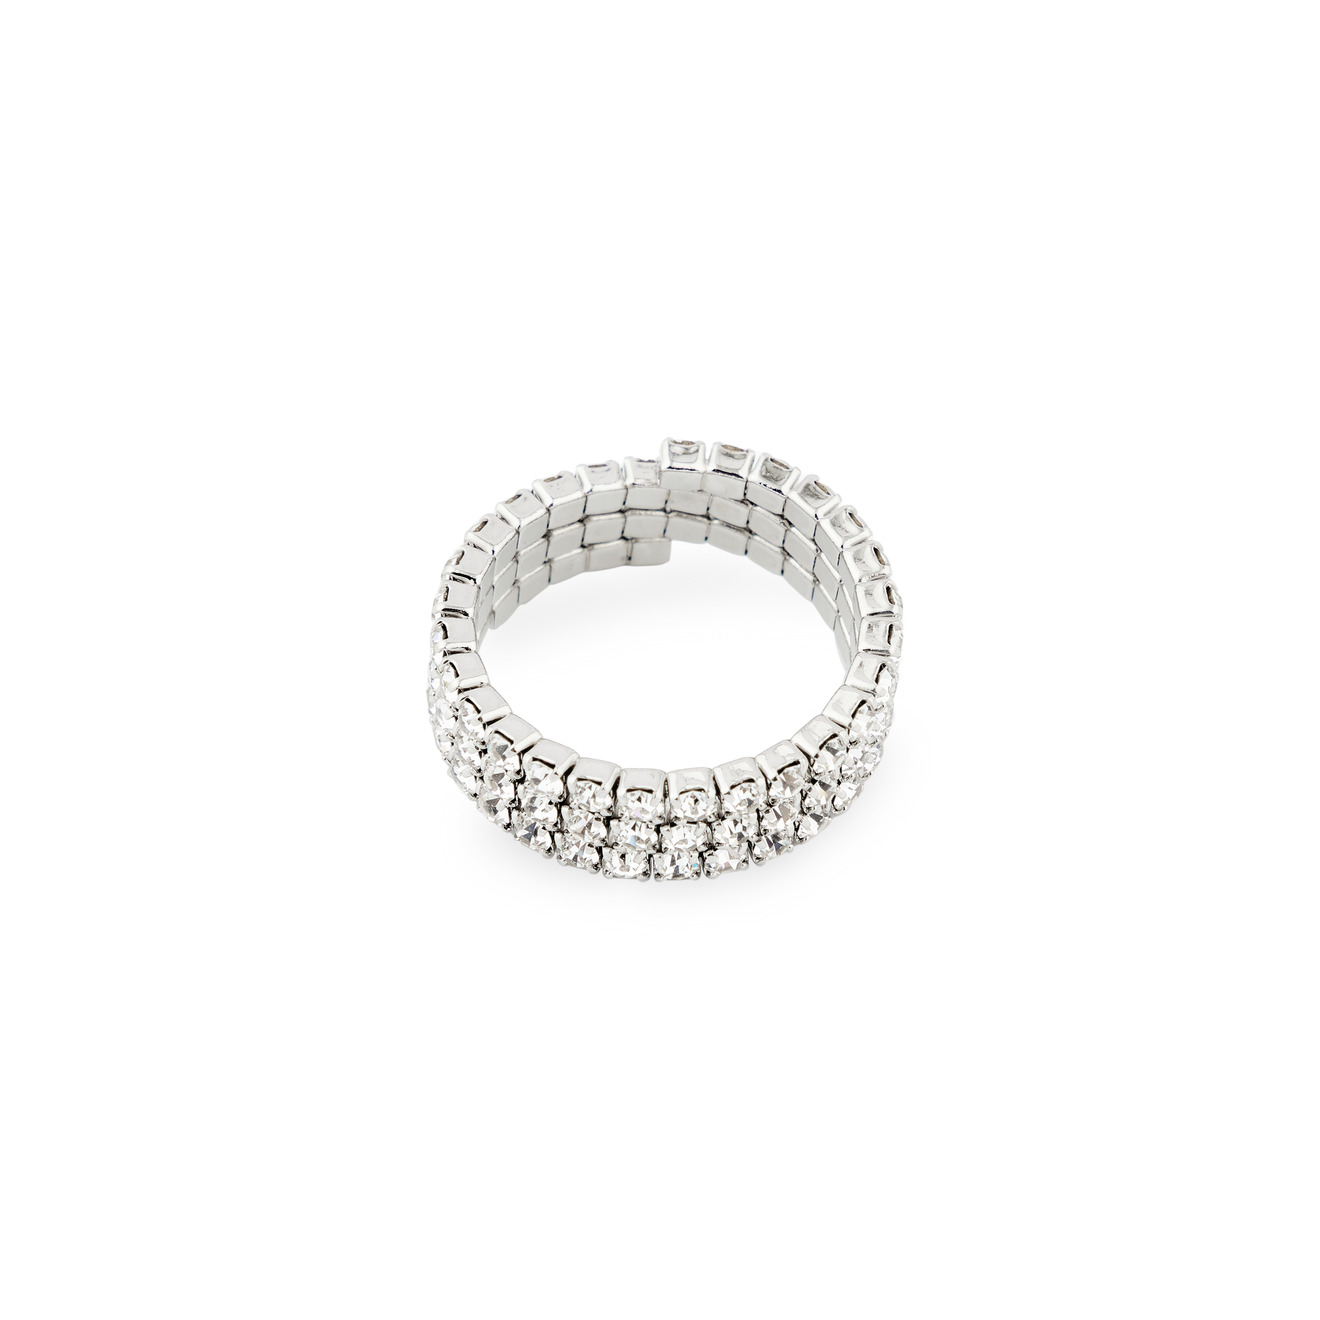 Herald Percy Серебристое кольцо из кристаллов herald percy серебристое многоуровневое кольцо из белых и розовых кристаллов и жемчужин